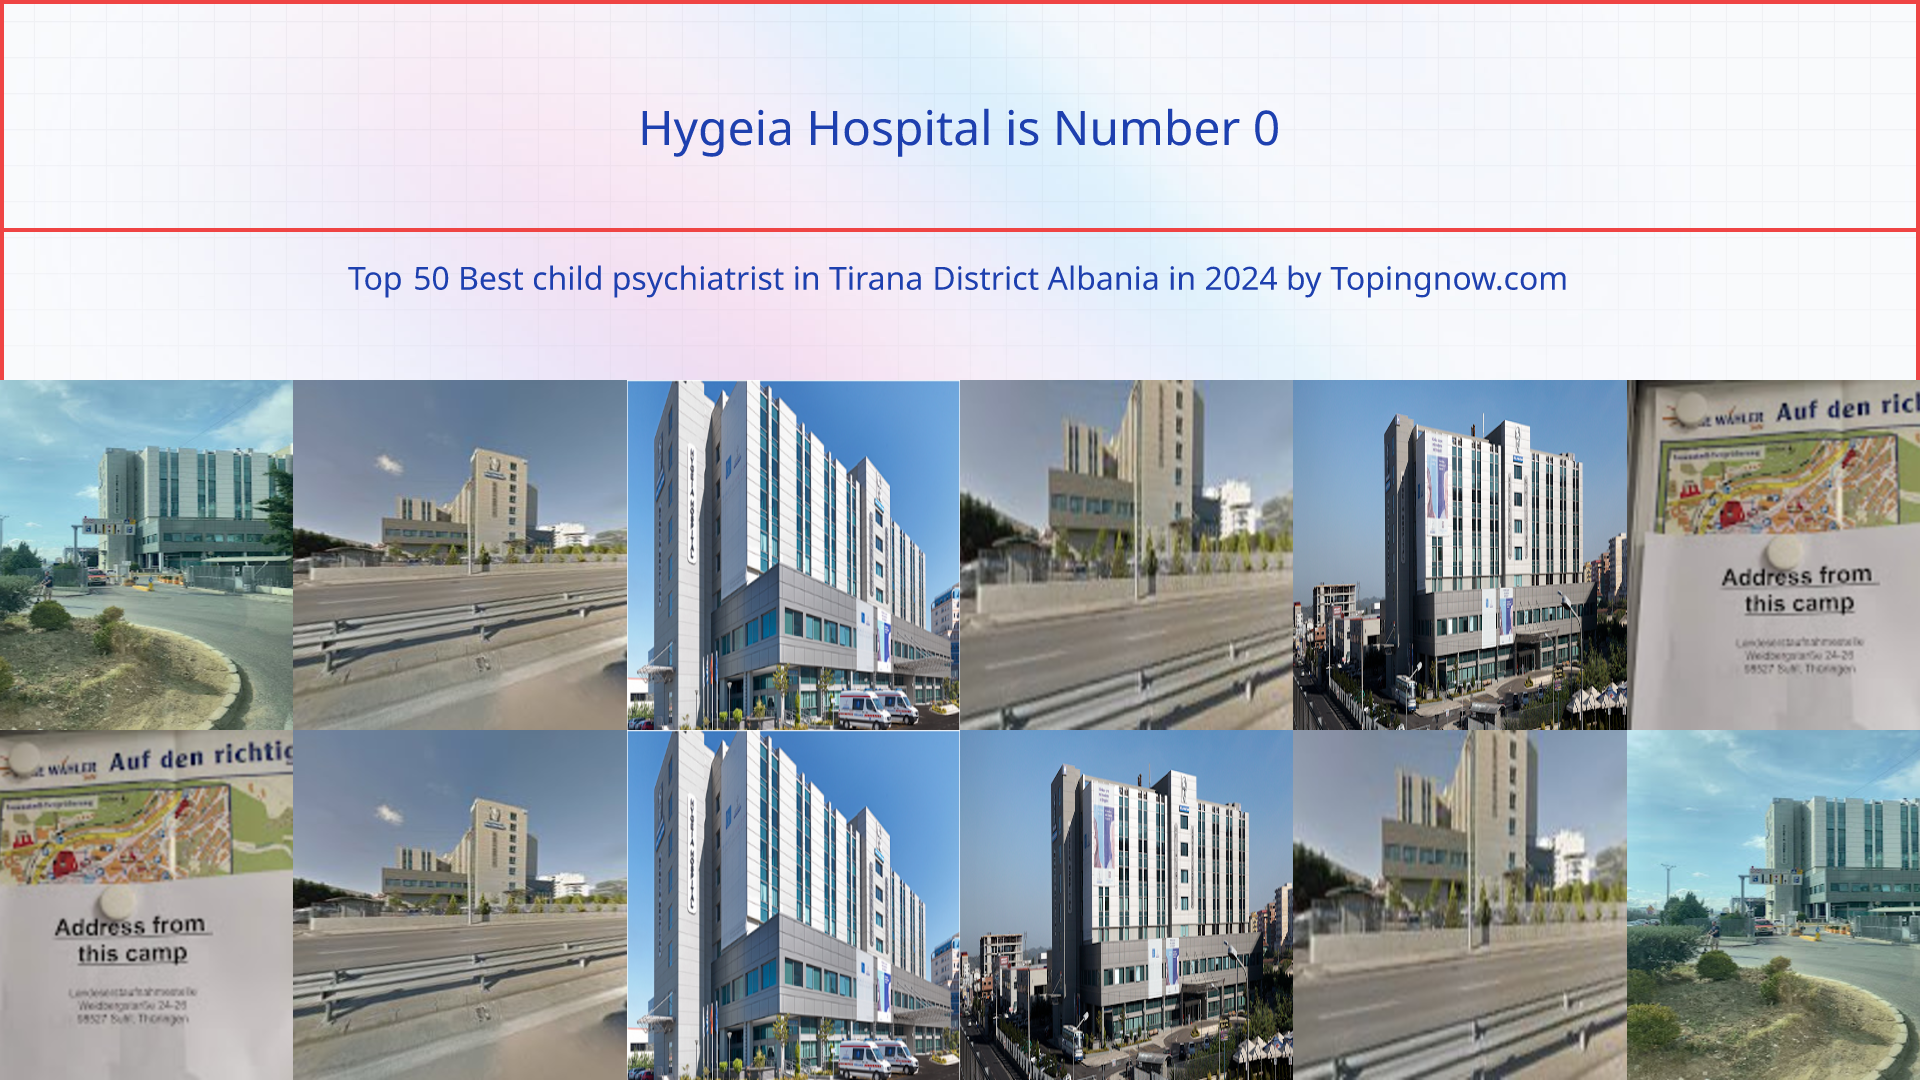 Hygeia Hospital: Top 50 Best child psychiatrist in Tirana District Albania in 2024